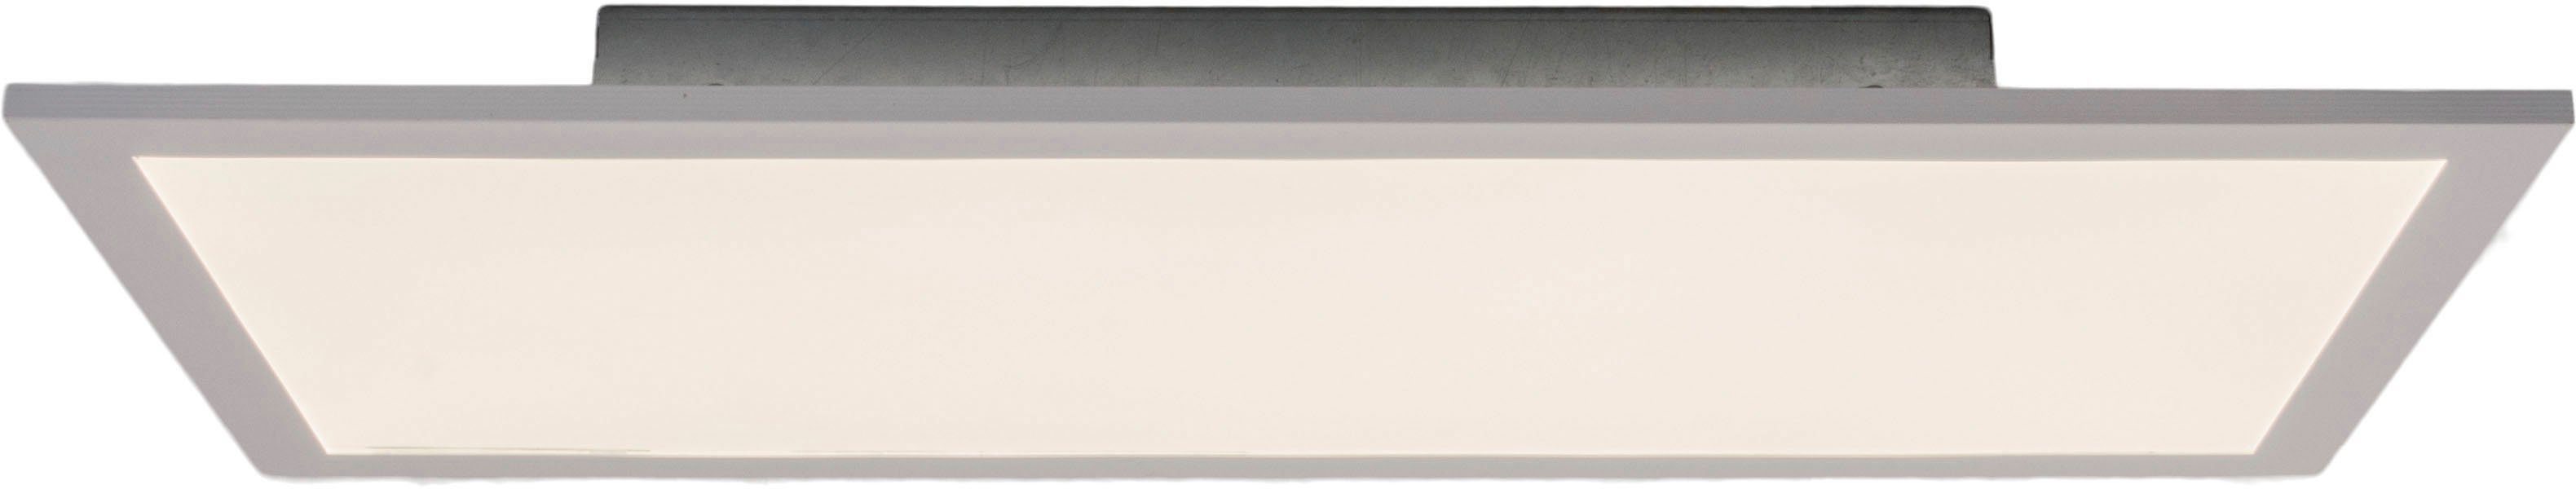 Nicola, inkl. Treiber Lichtfarbe weiß, LED Länge LED näve neutralweiß, fest 59,5cm, integriert, Panel Neutralweiß, LED,